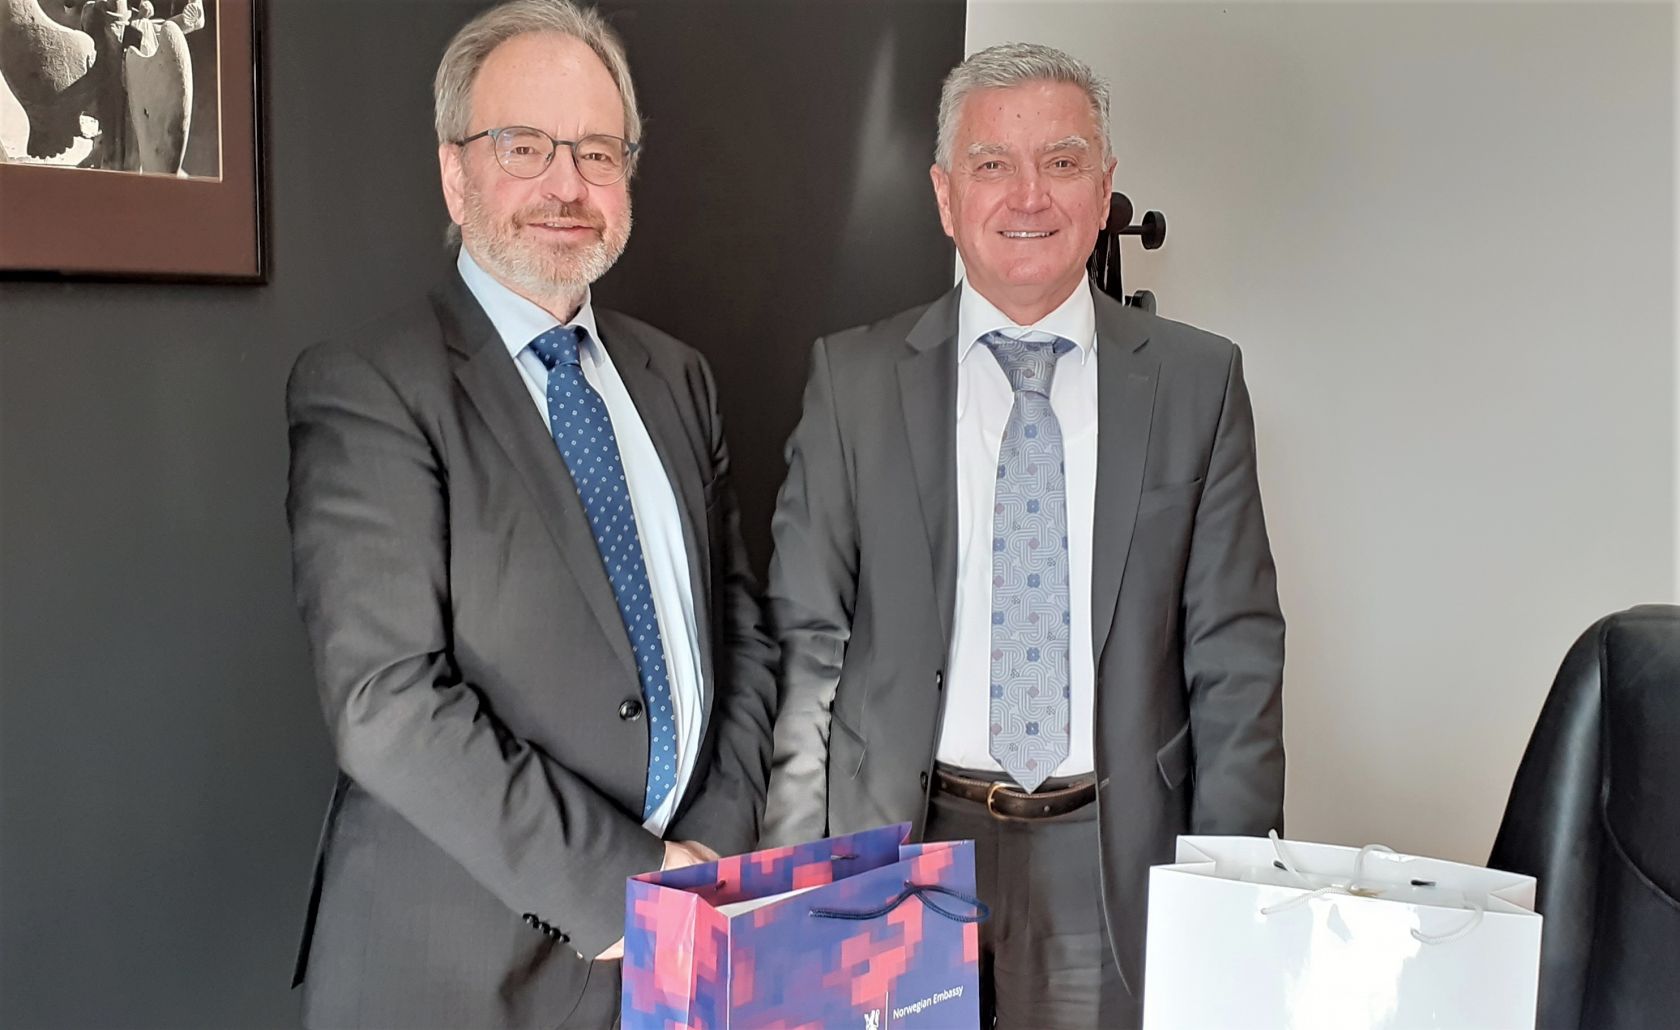 Gradonačelnik Burić primio Nj. E. Haakona Blankenborga, veleposlanika Kraljevine Norveške